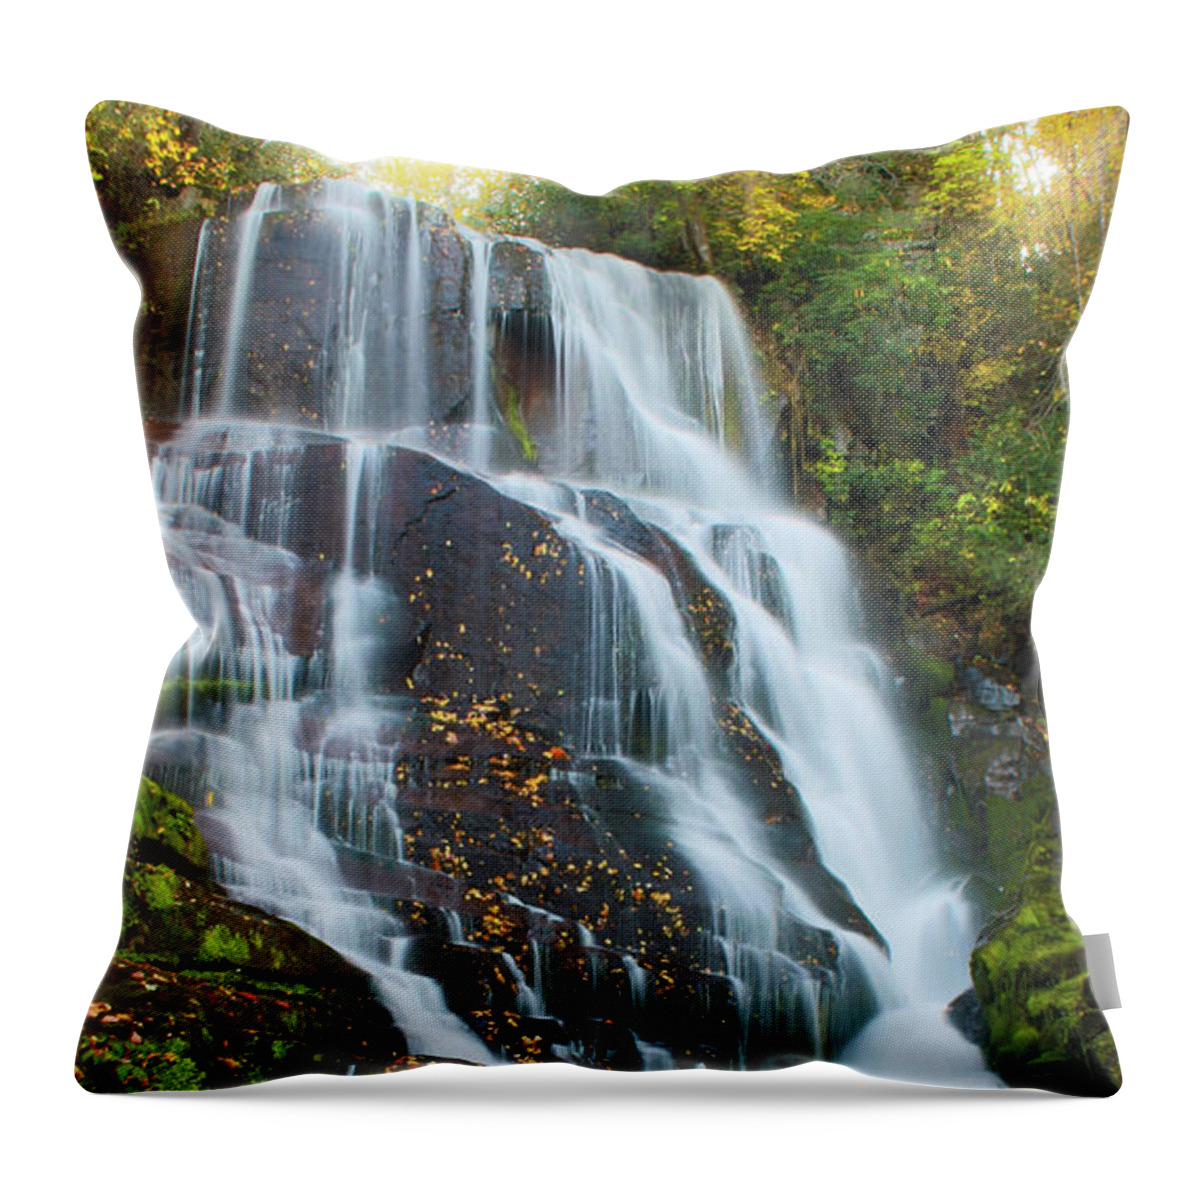 Nunweiler Throw Pillow featuring the photograph Eastatoe Falls 01 by Nunweiler Photography